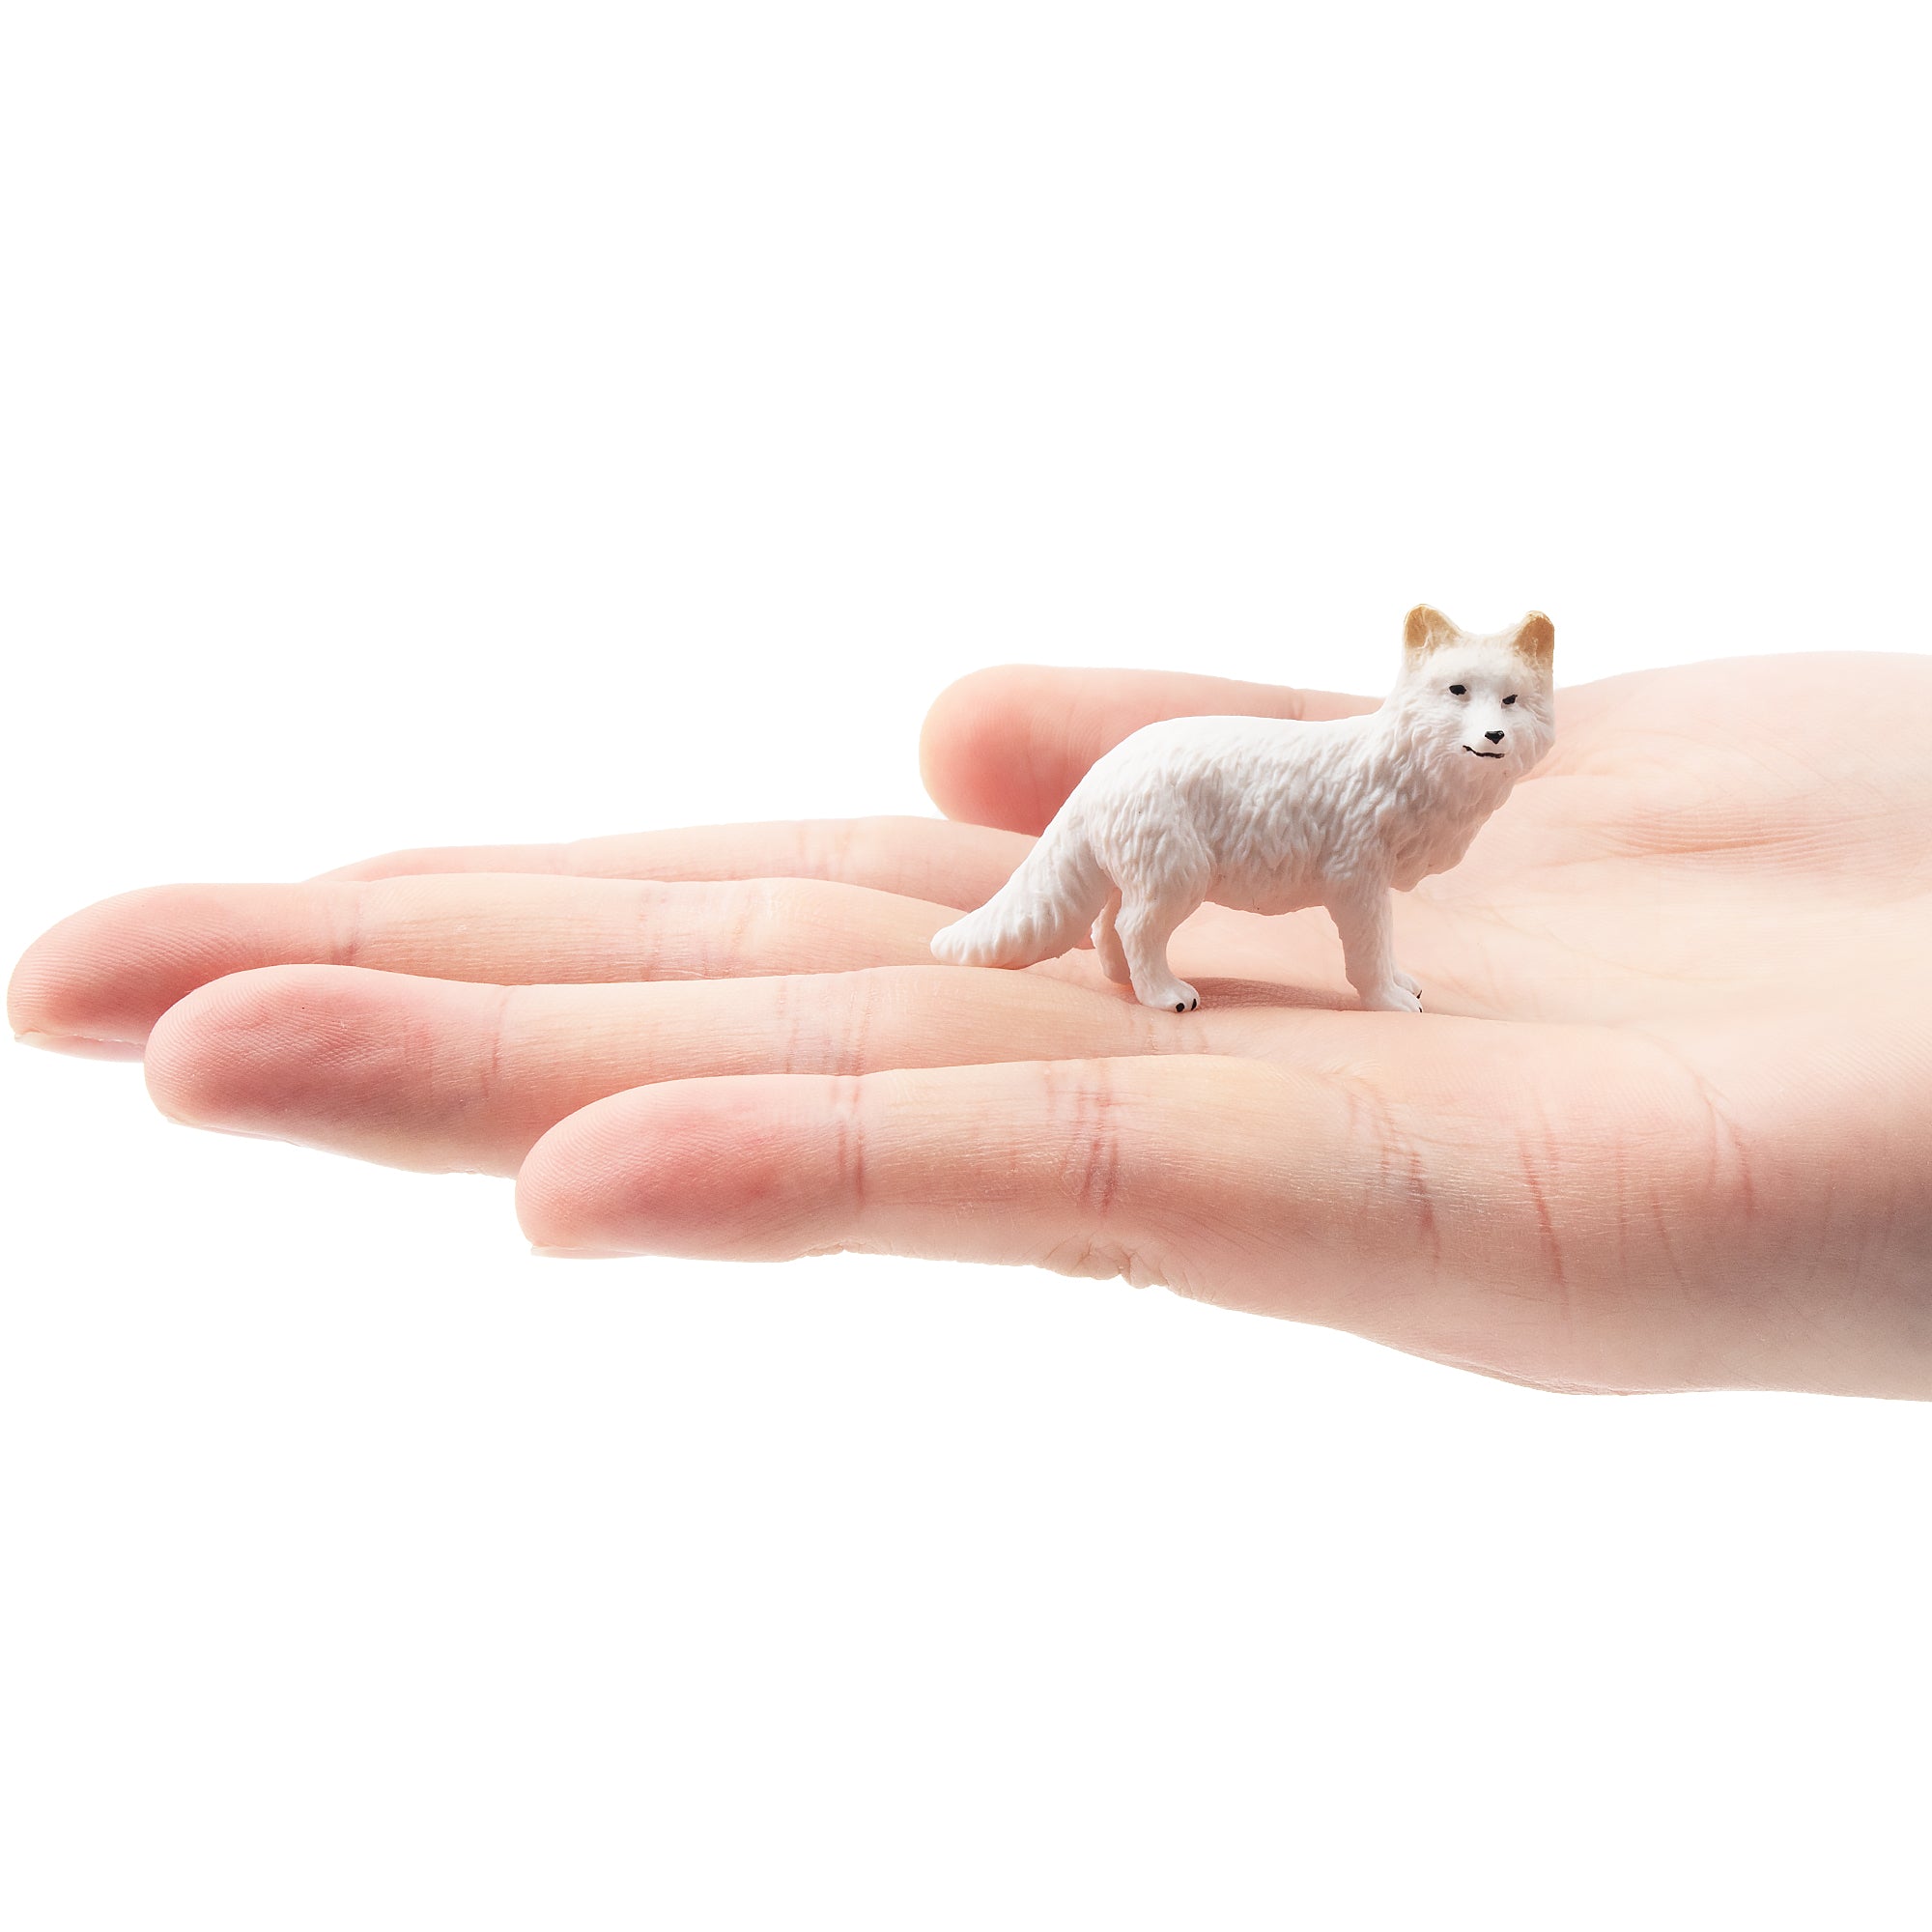 Toymany Arctic Fox Figurine Toy-on hand